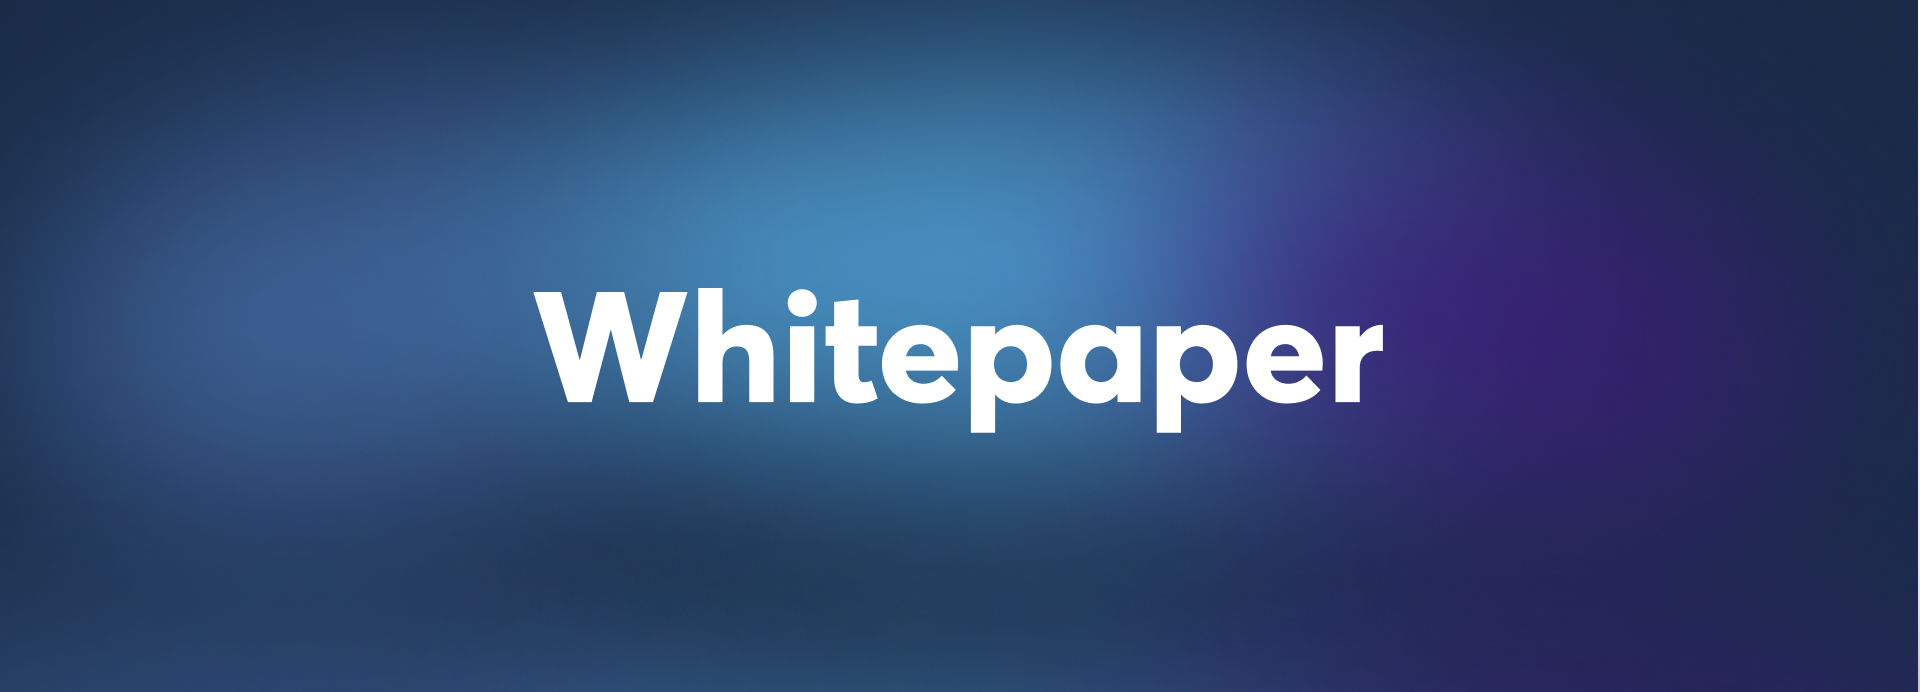 whitepaper-label